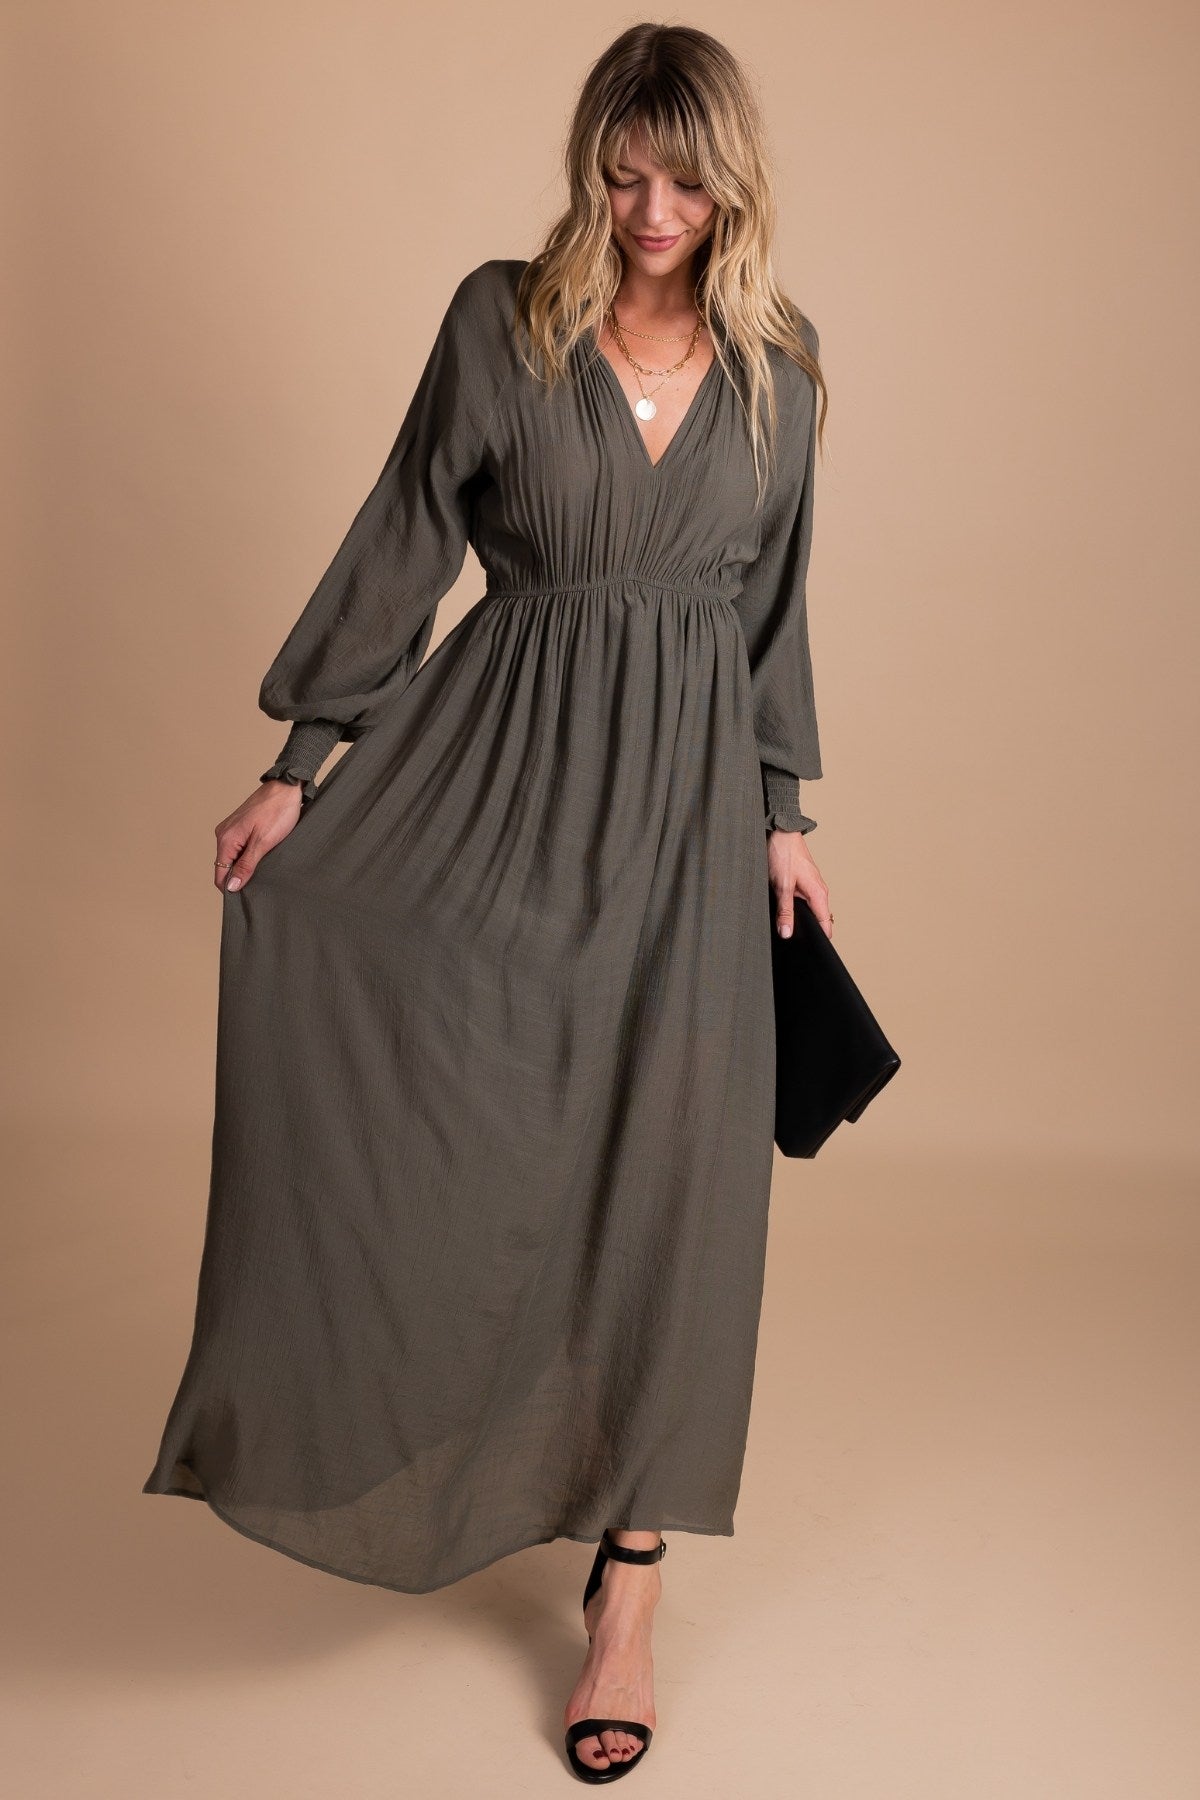 Deep V Neck Long Sleeve Sequin Evening Dress with Side Slit - Ever-Pretty US